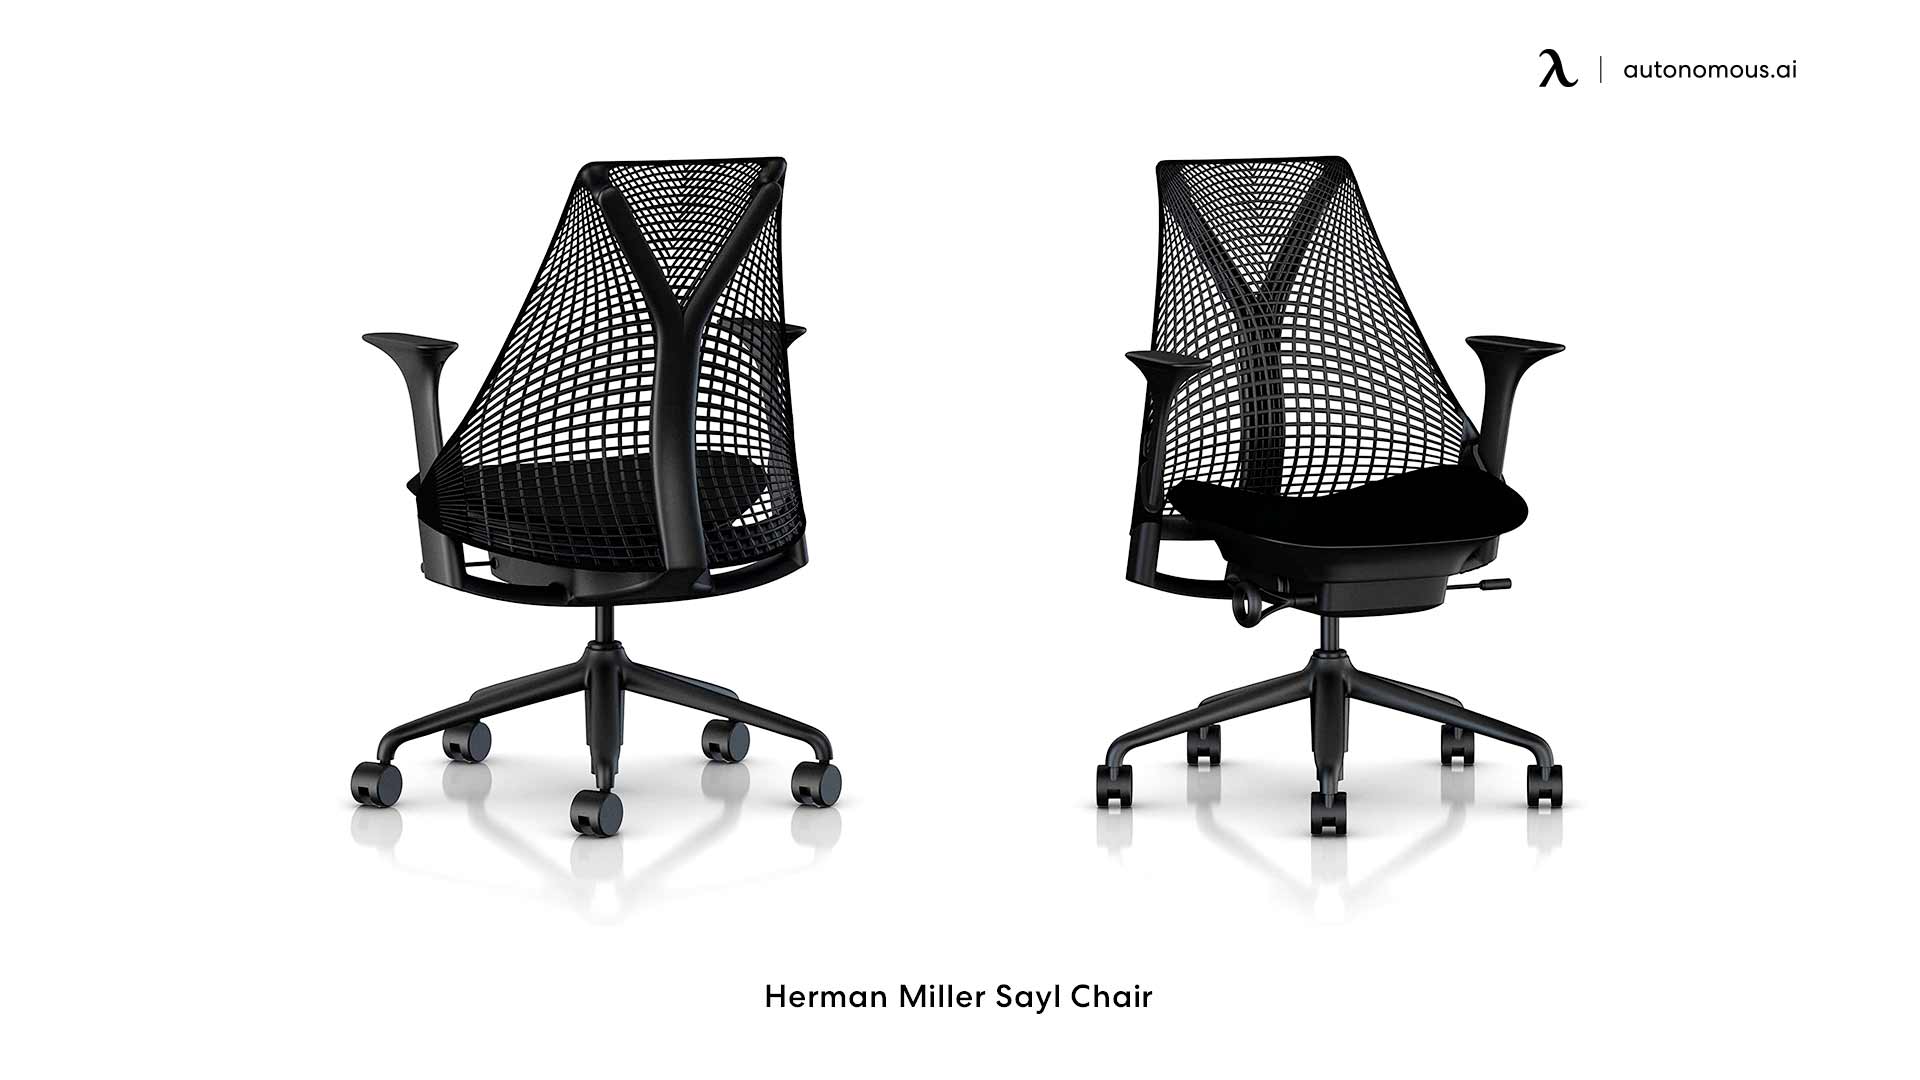 Herman Miller Sayl Desk chair in the UK